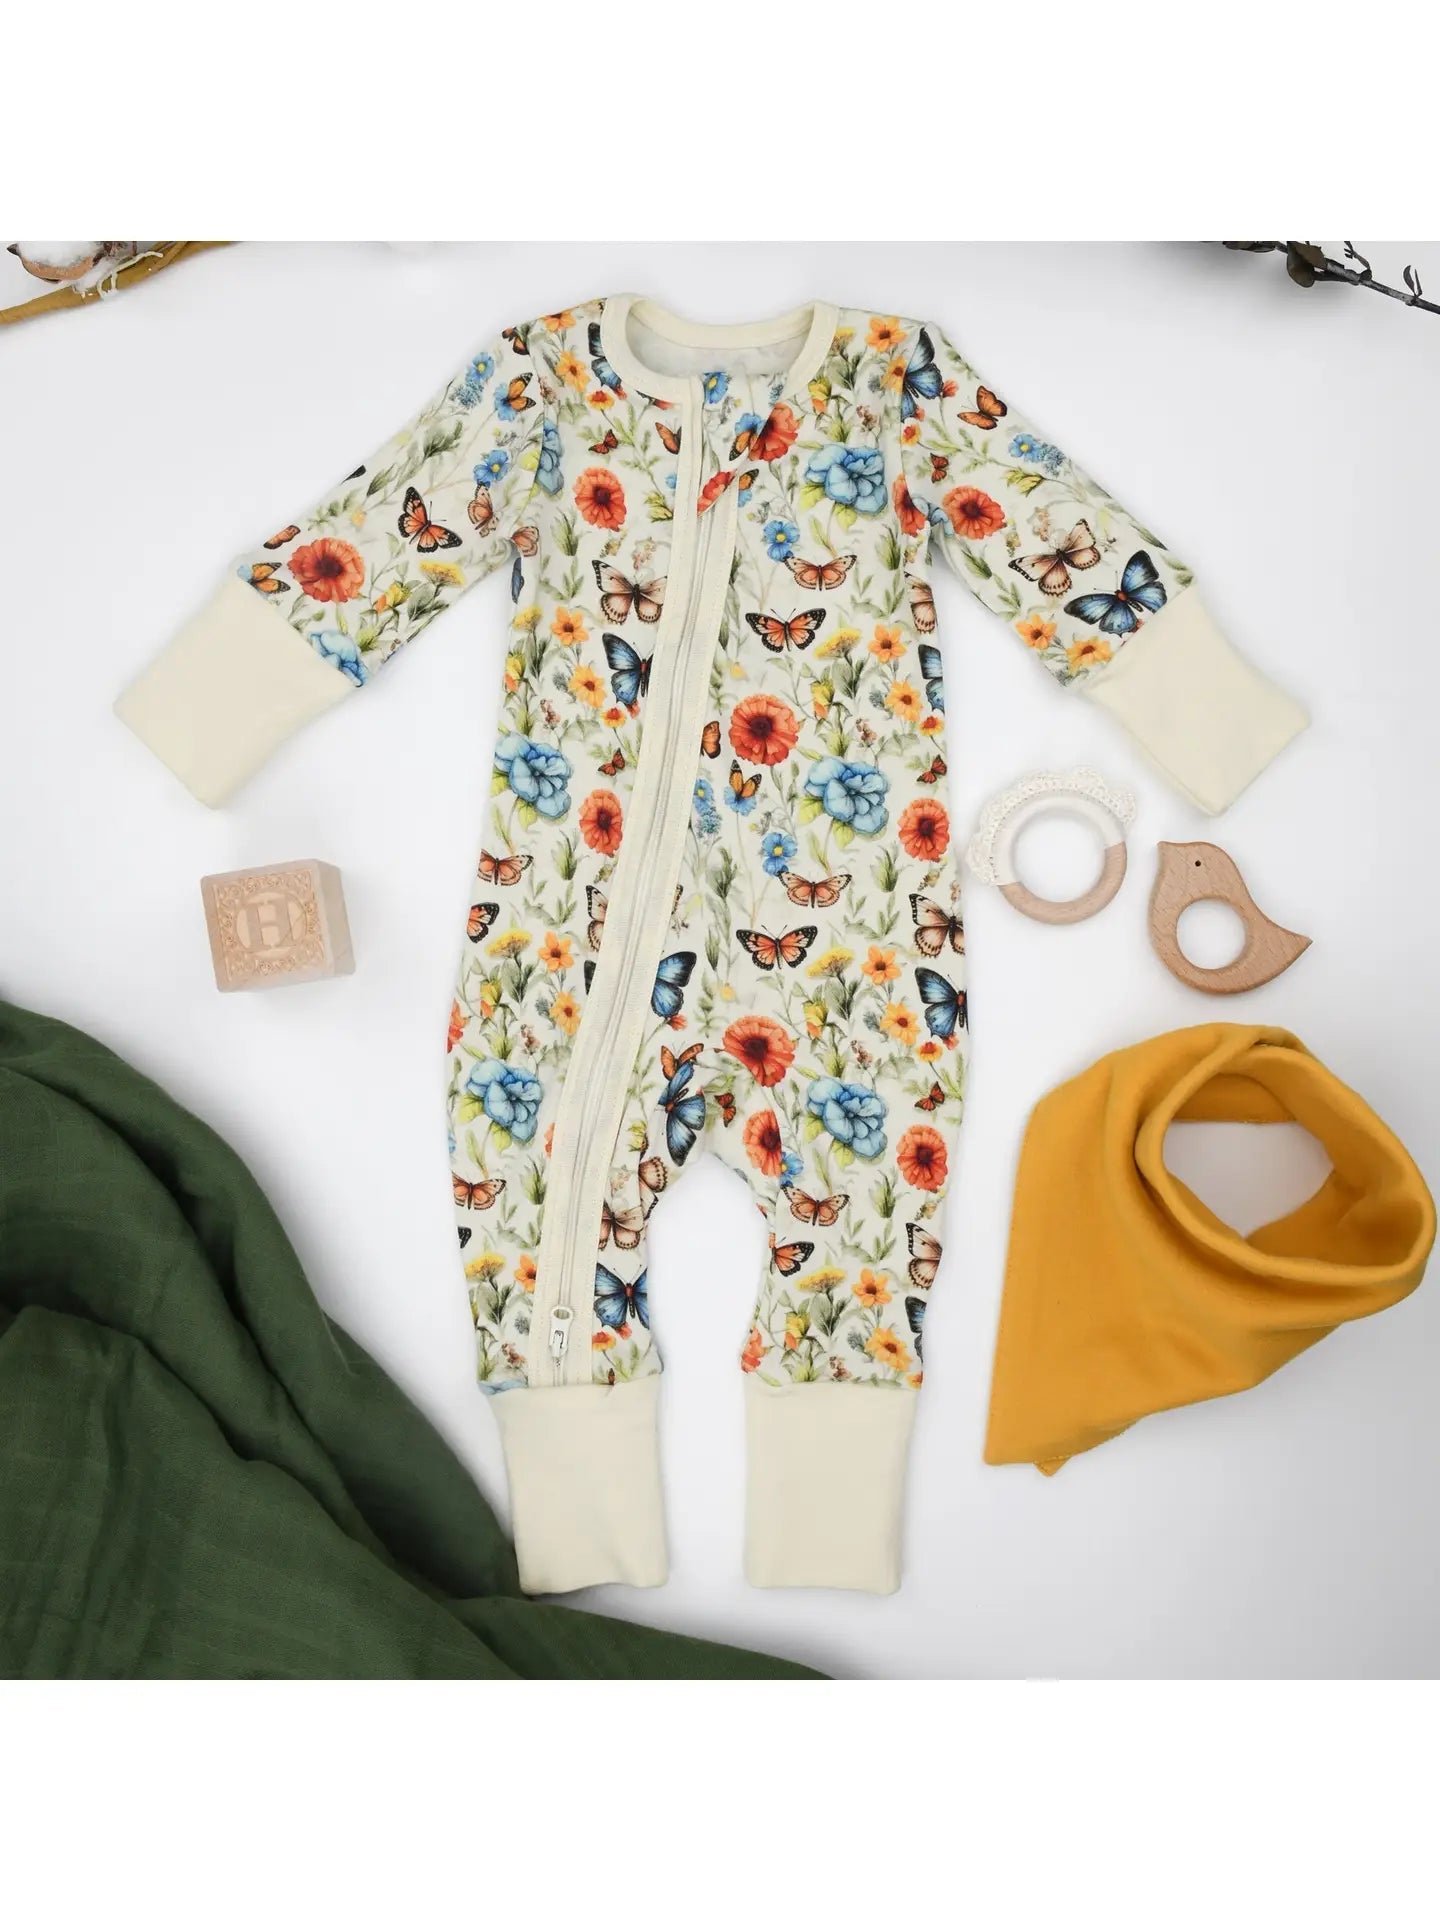 Organic Cotton Baby Pajamas 2-Way Zip Front Zipper Sleeper, Blossom - Wild Child Hat CoEarthyPajamas